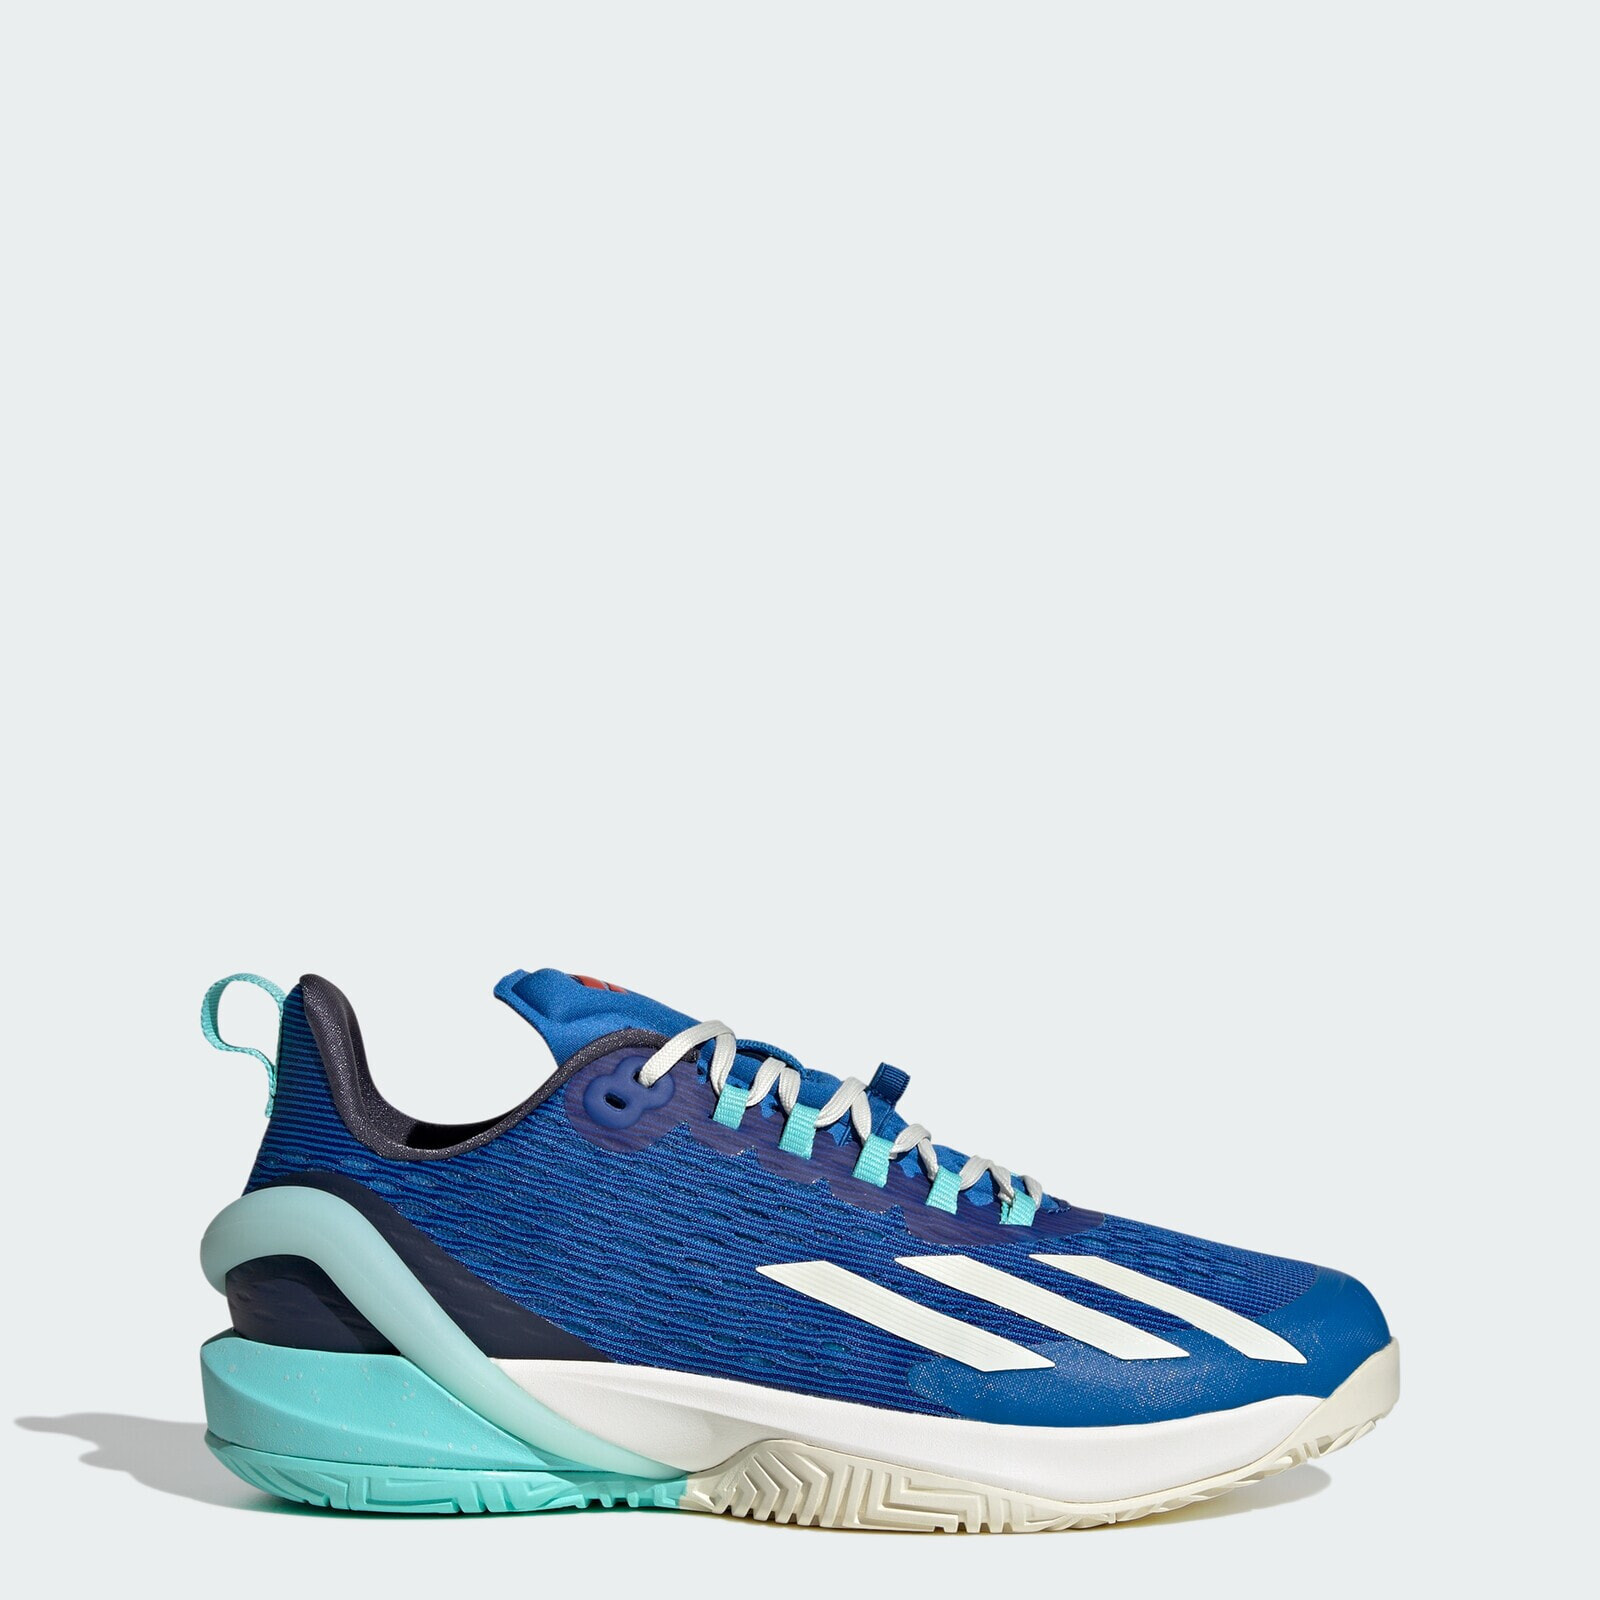 adidas men Adizero Cybersonic Tennis Shoes